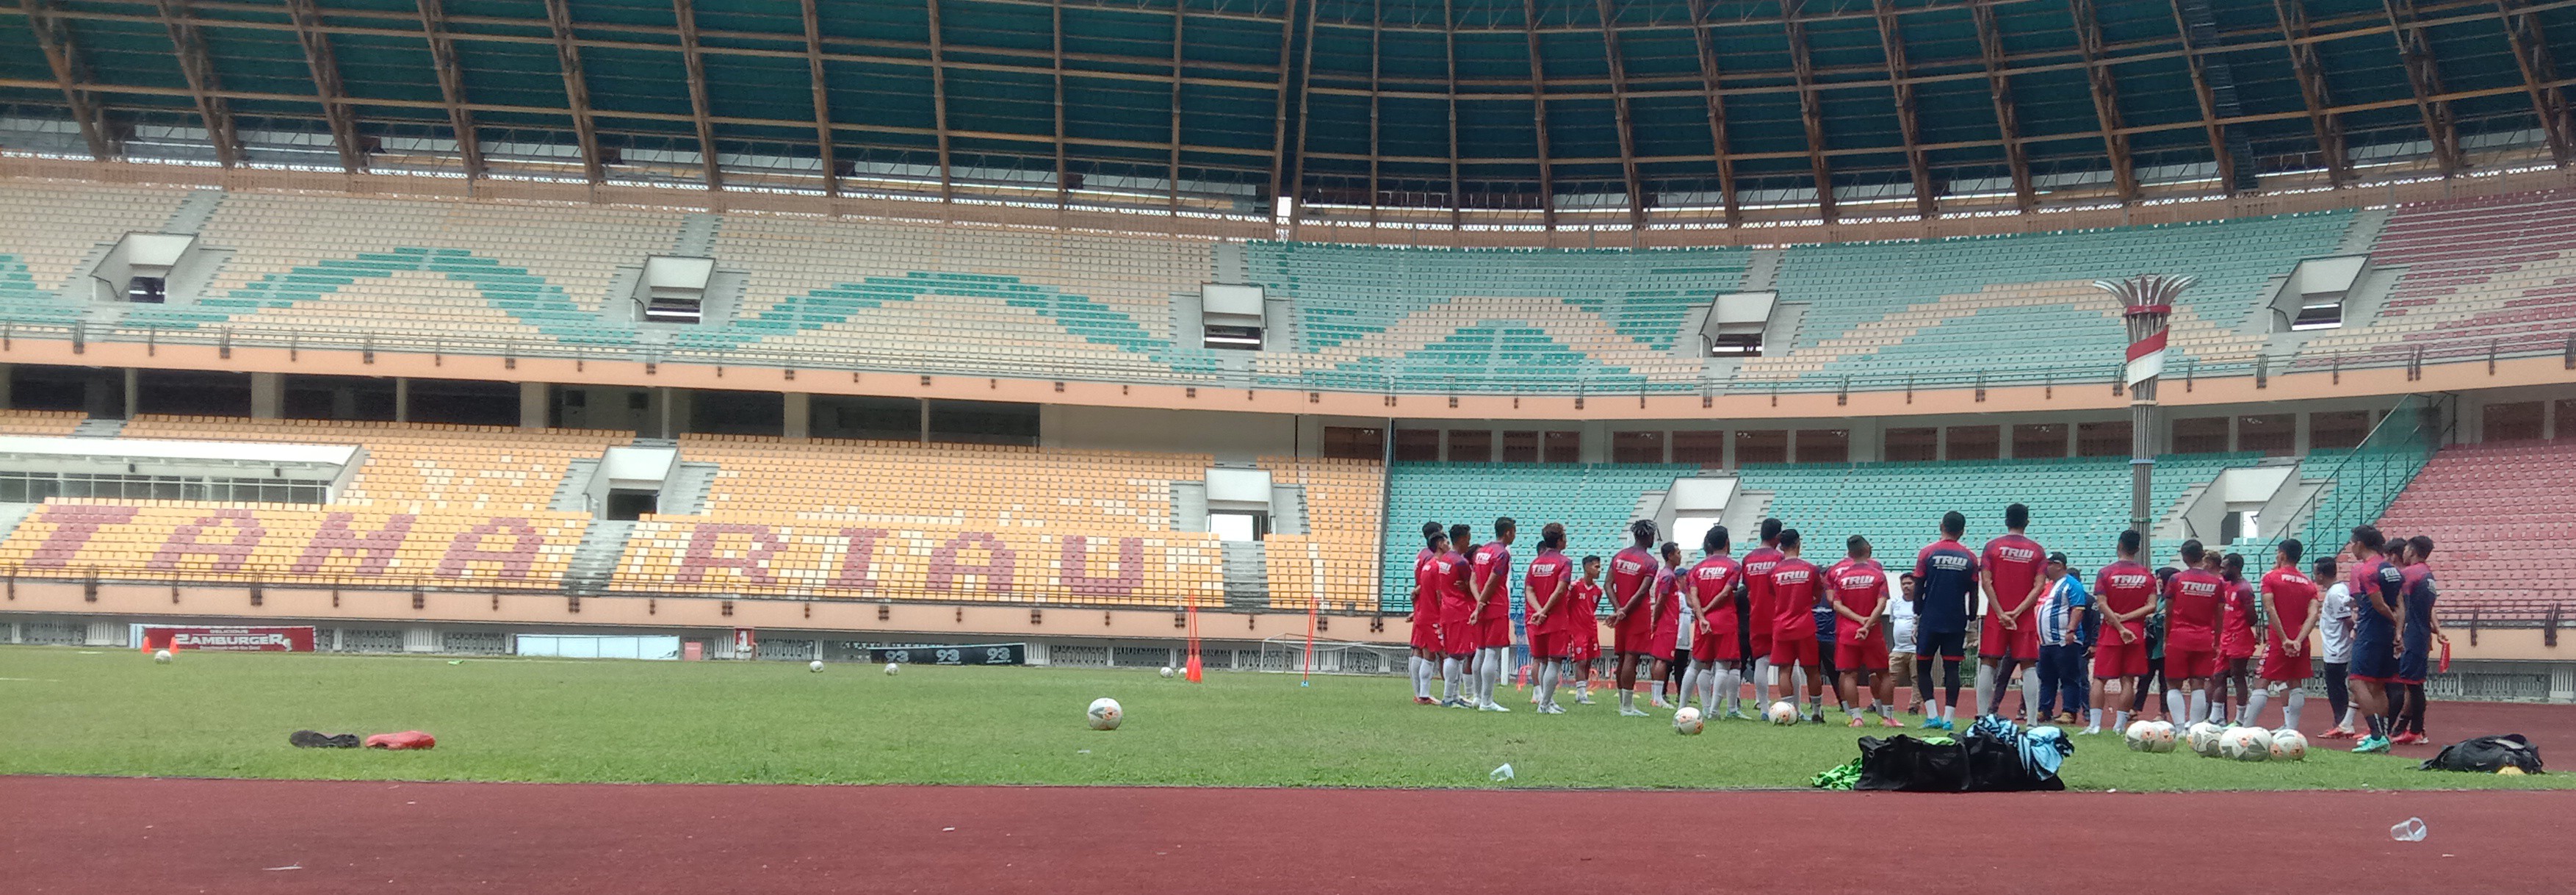 Hasil Pertemuan Manajemen & Kadispora Riau: Stadion Utama Riau Tetap Home Base PSPS Riau